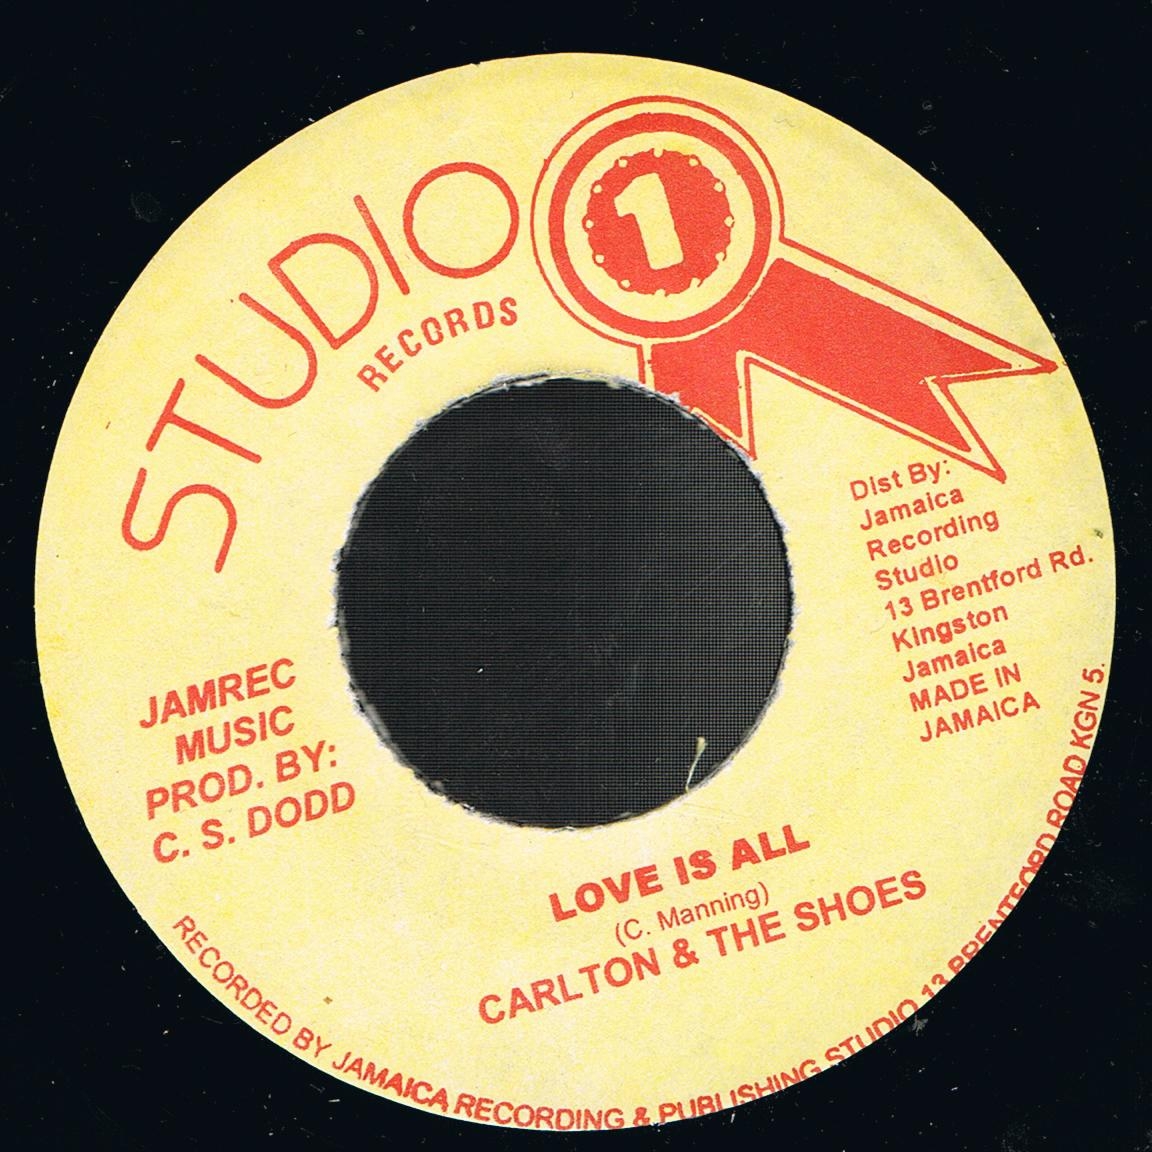 Carlton & The Shoes - Love is All / Sound Dimension - Love Version (Original Stamper 7")